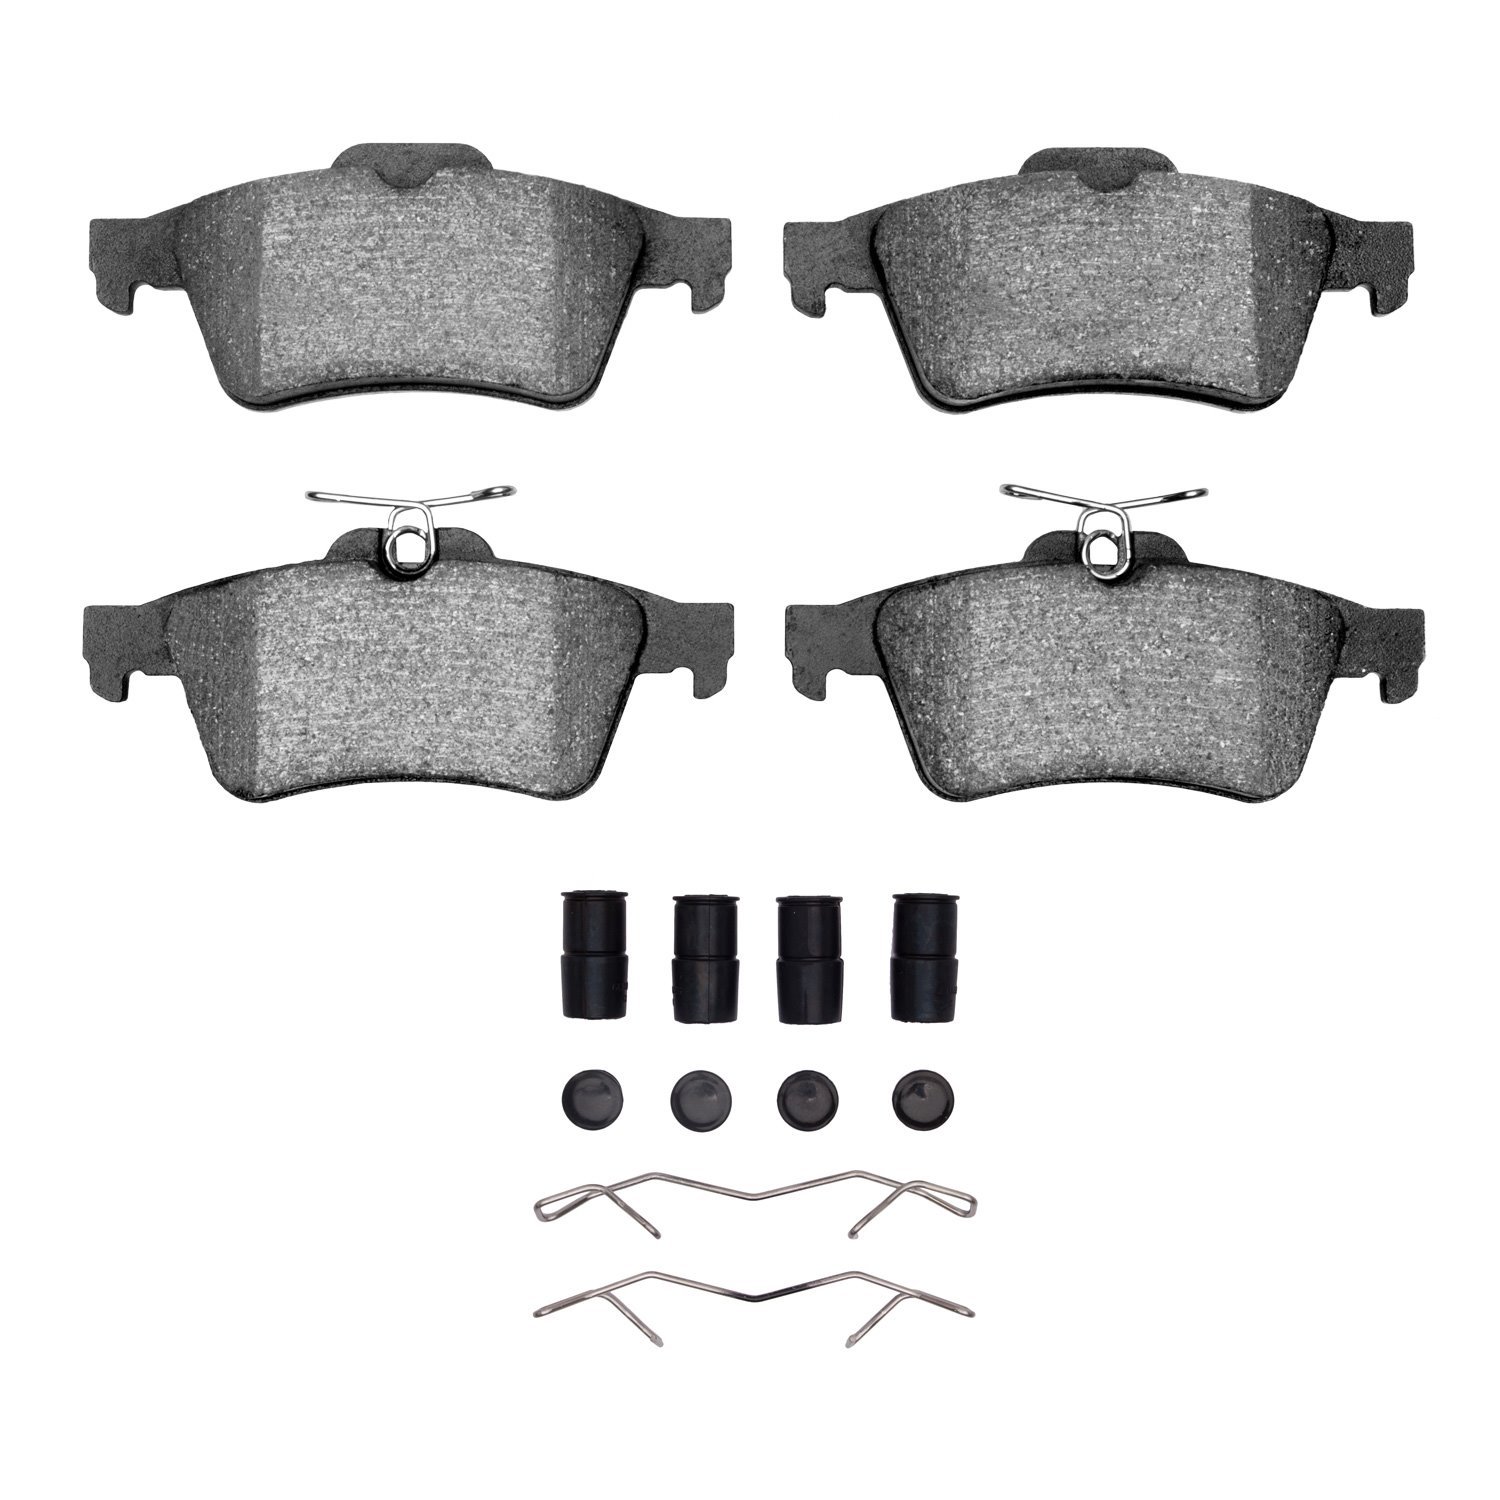 1311-1095-01 3000-Series Semi-Metallic Brake Pads & Hardware Kit, Fits Select Multiple Makes/Models, Position: Rear